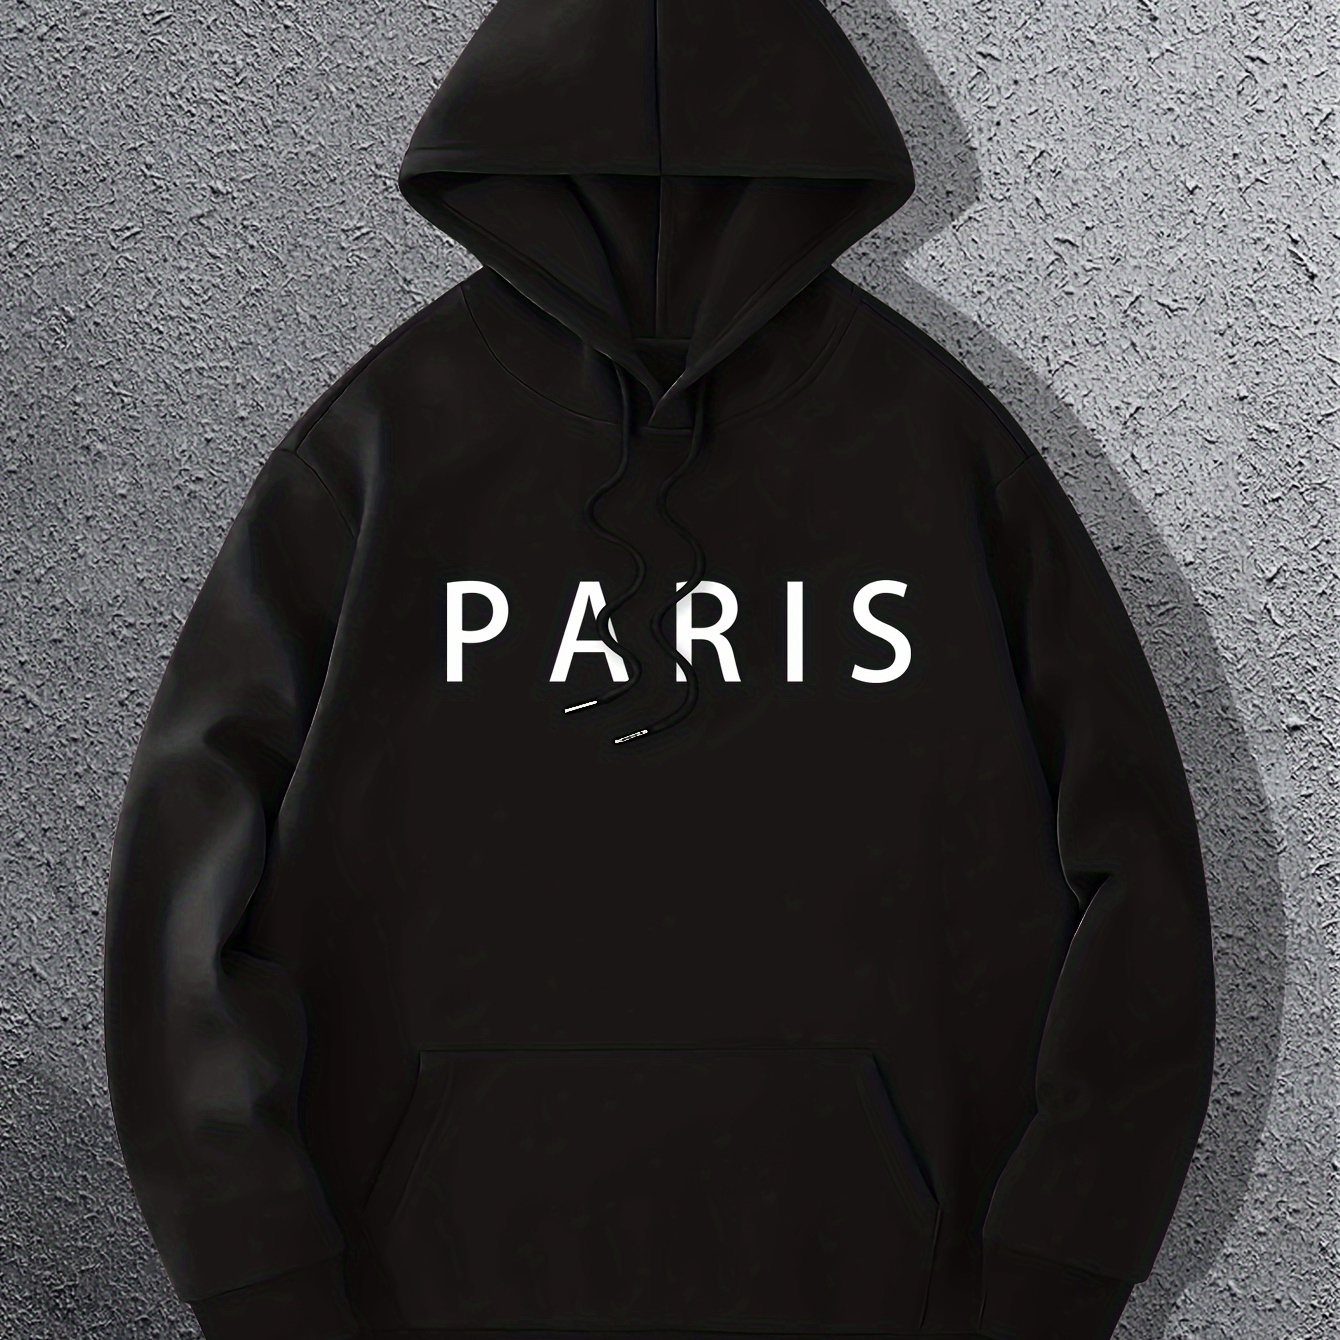 

Paris Pattern Print Hooded Sweatshirt, Hoodies Fashion Casual Tops For Spring Autumn, Men's Clothing